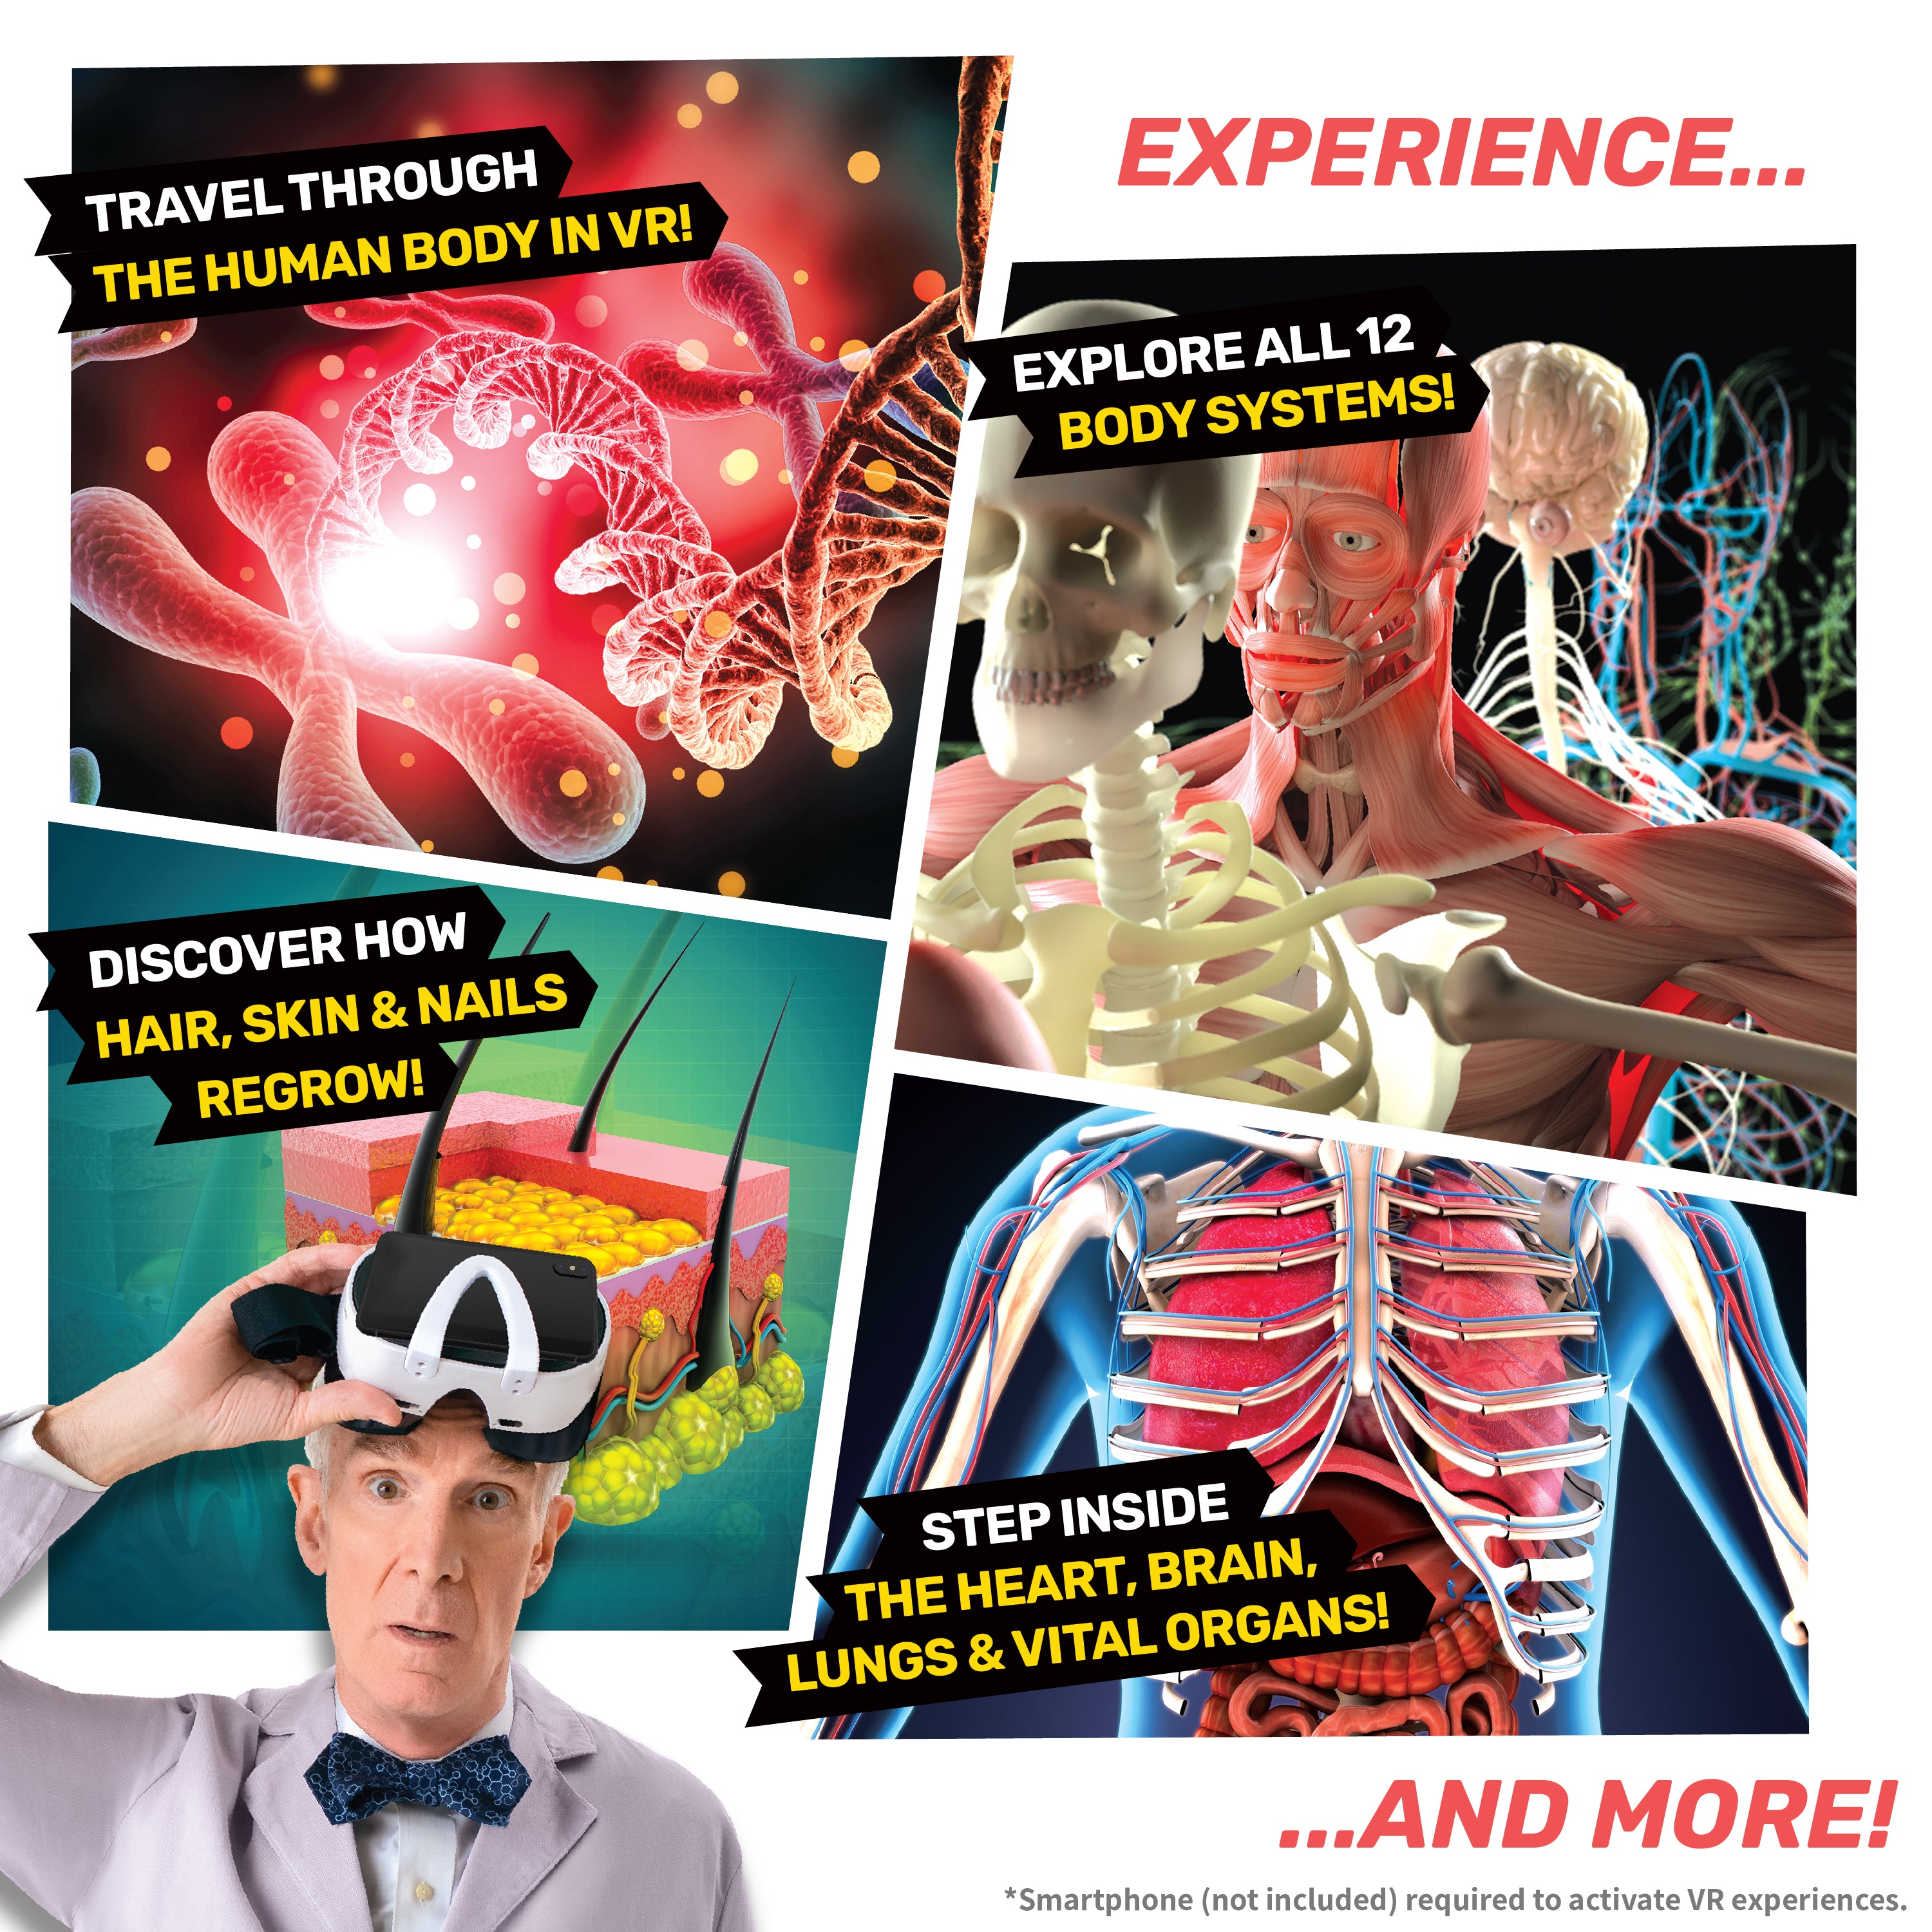 Bill Nye's Virtual Reality Human Body Kit - BODY LAB VR